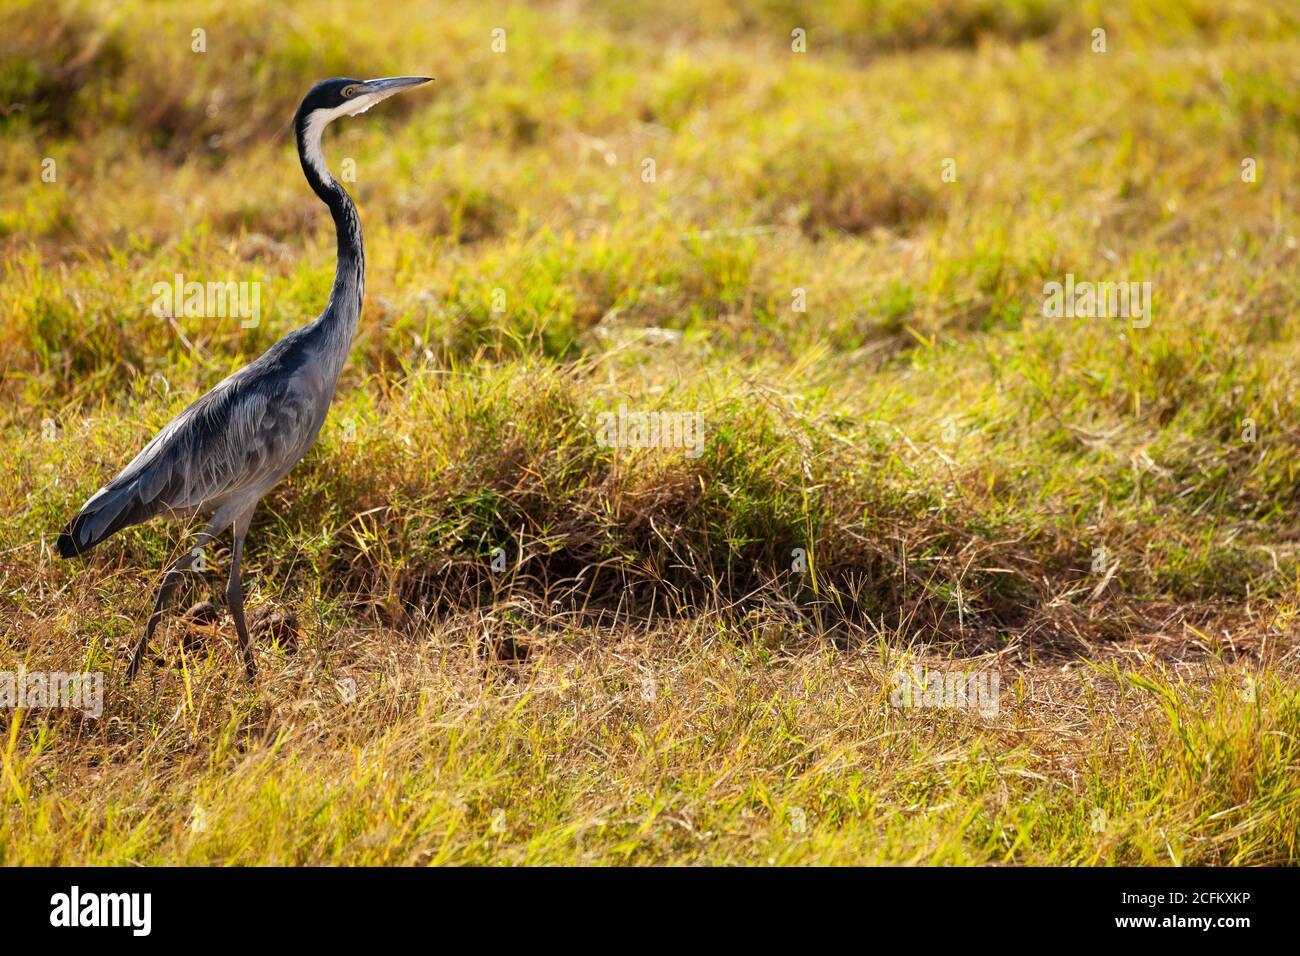 Walking Great Blue Heron or Ardea Herodias in Kenya park bird in the natural environment Stock Photo